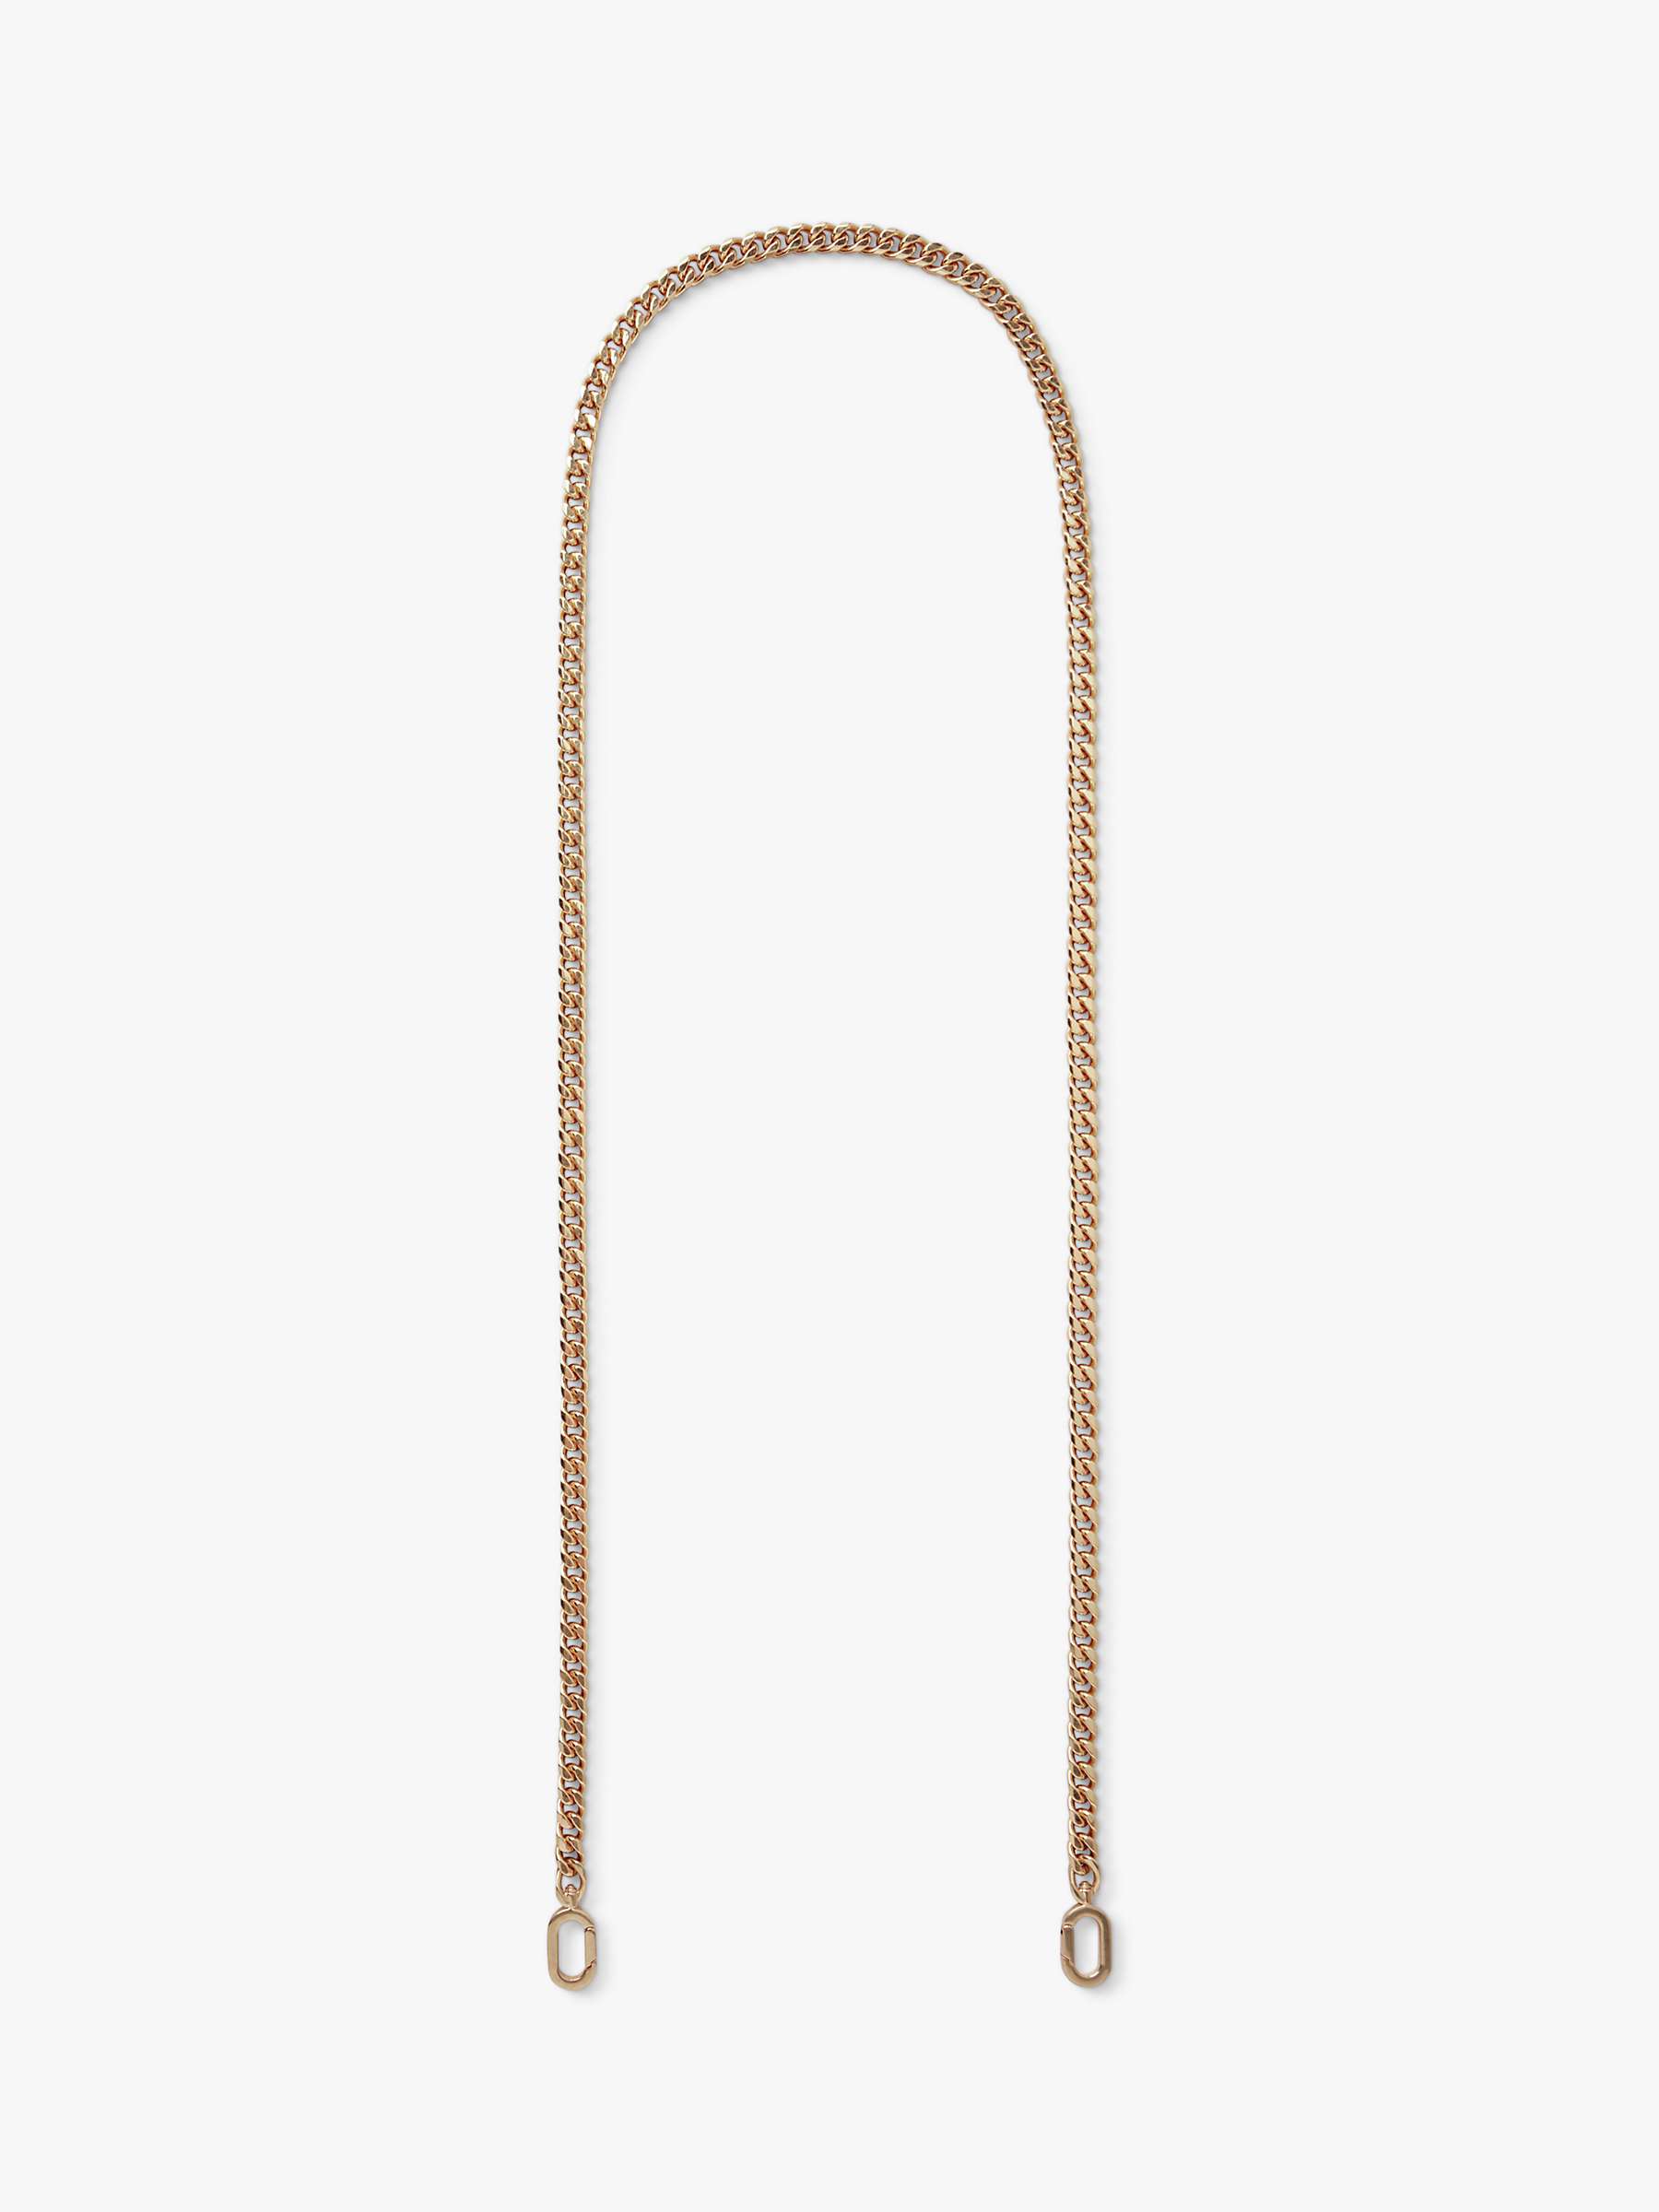 Buy Mulberry Flat Metal Chain Handbag Strap, New Brass Online at johnlewis.com